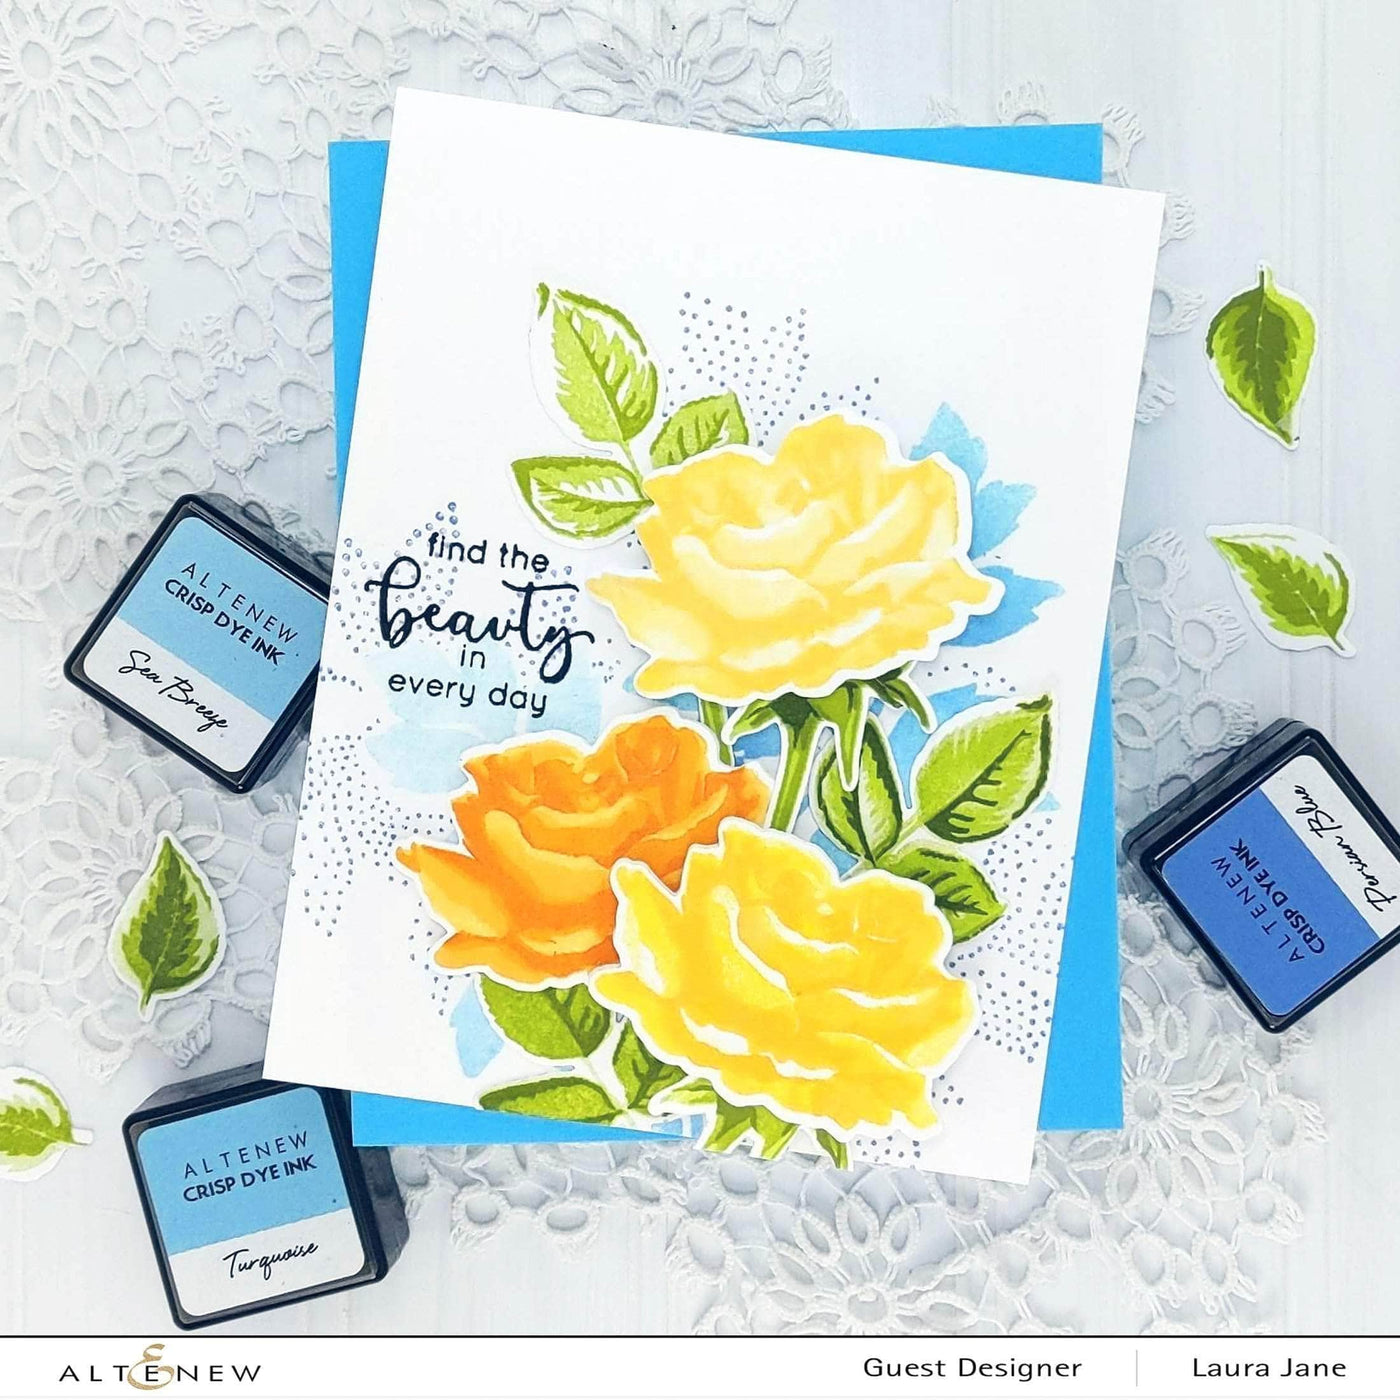 Altenew Creativity Kit Bundle Framed Beauty Creativity Cardmaking Kit